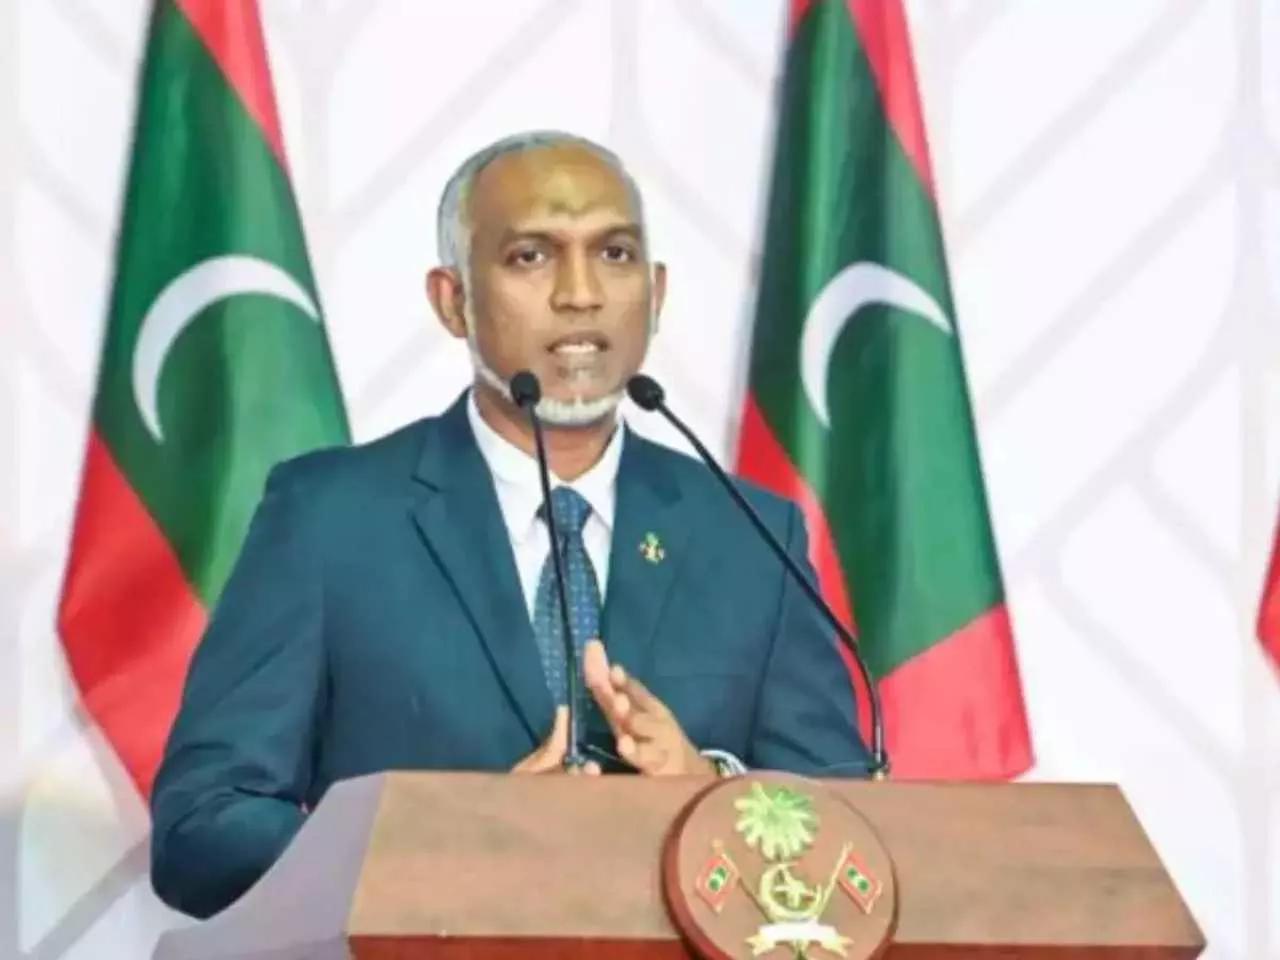 Maldives government rejects its minister's derogatory comments against PM Modi